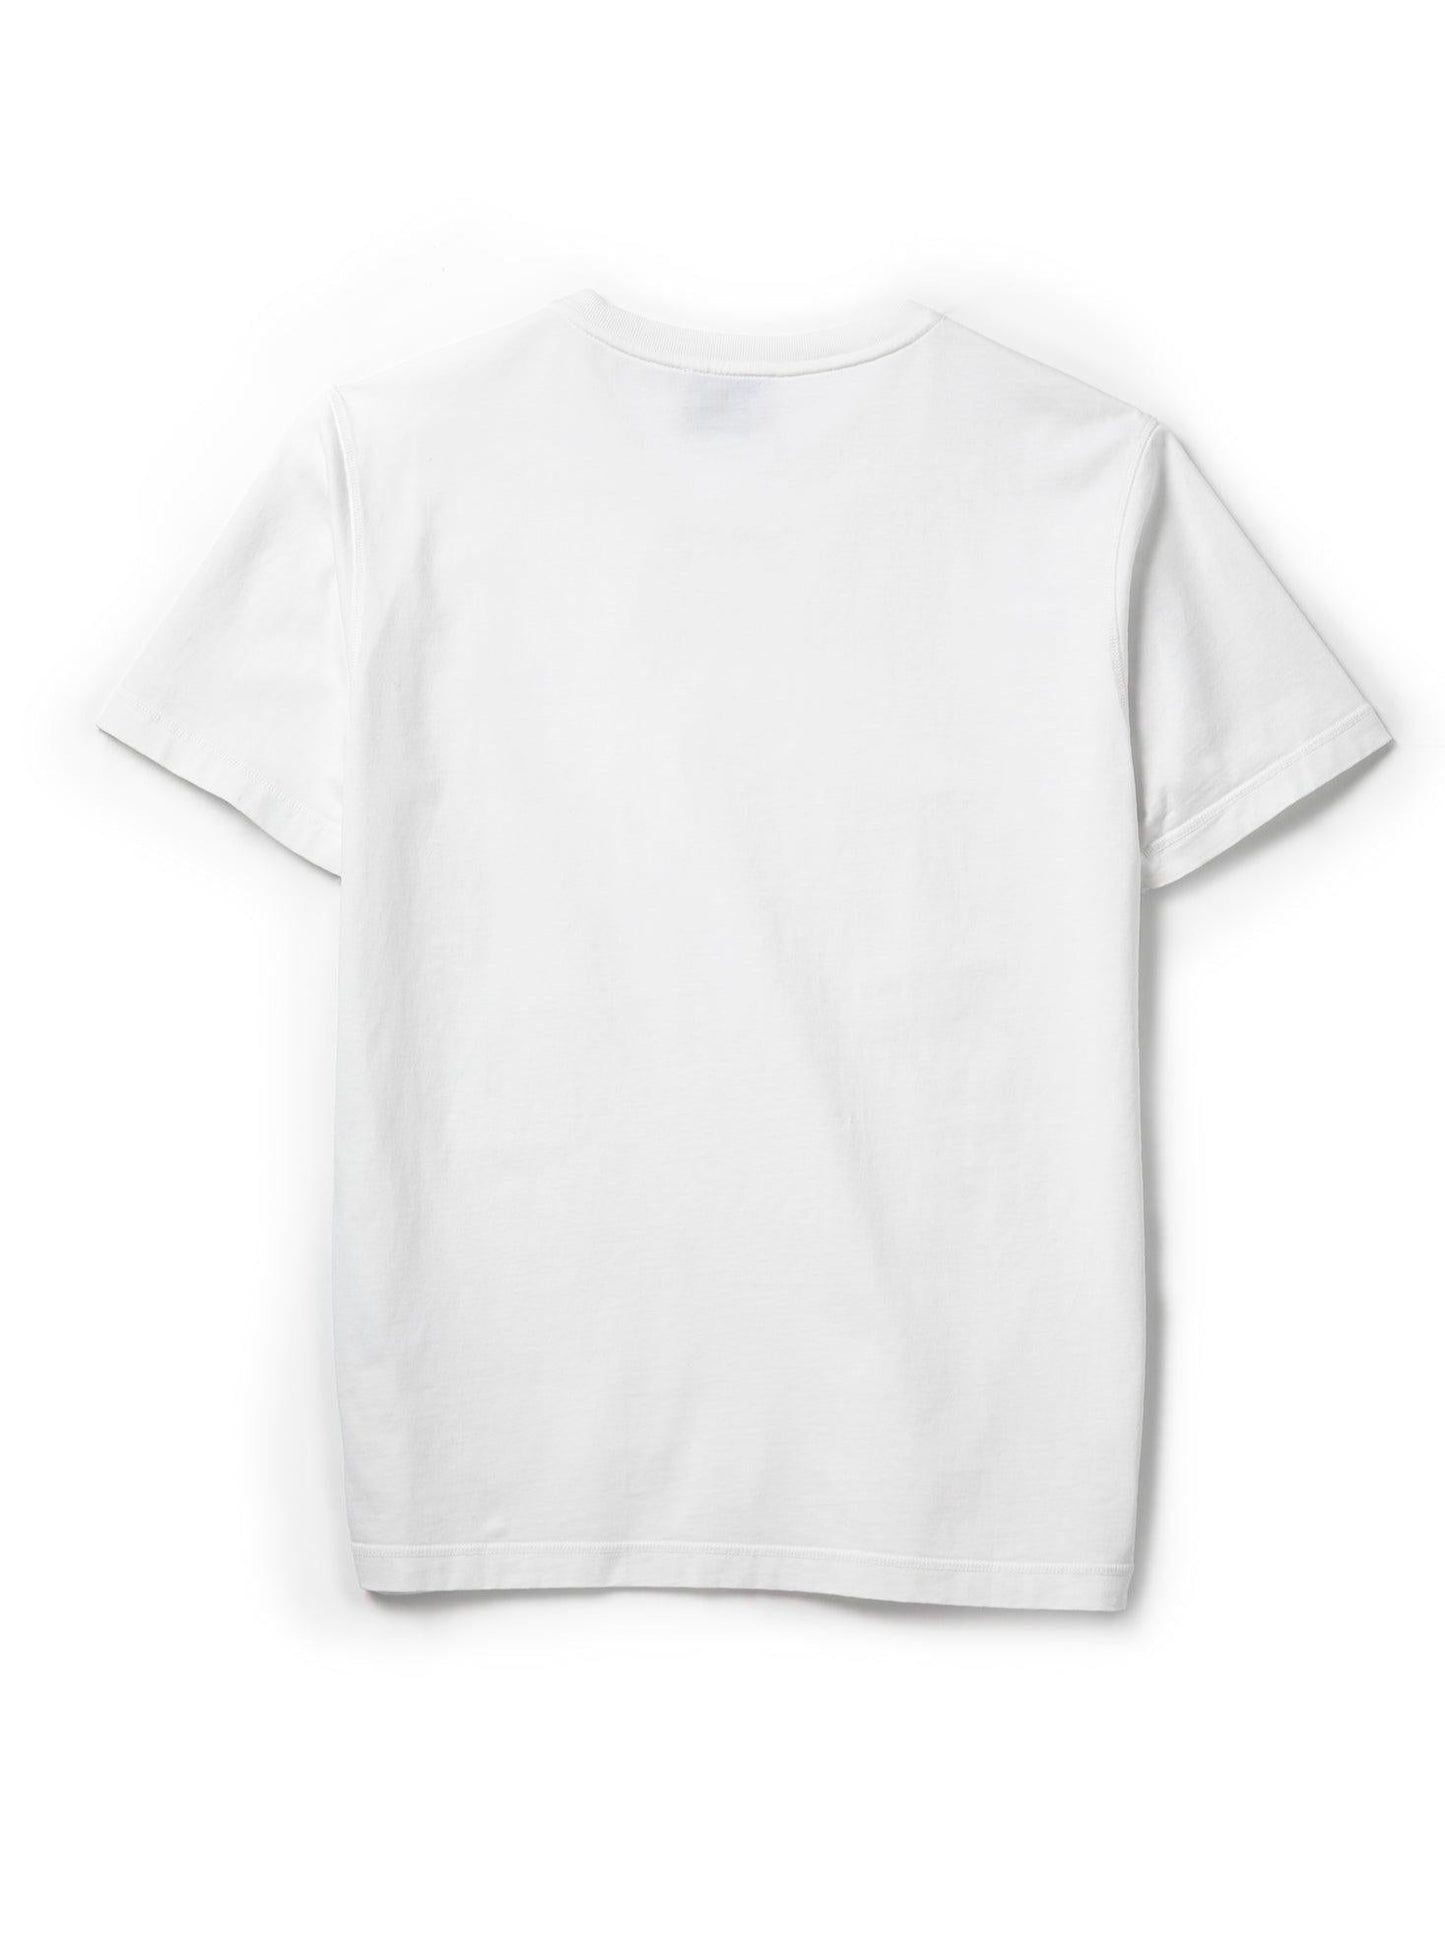 
                  
                    Men's Small Logo T-shirt - White - ORILABO Project
                  
                